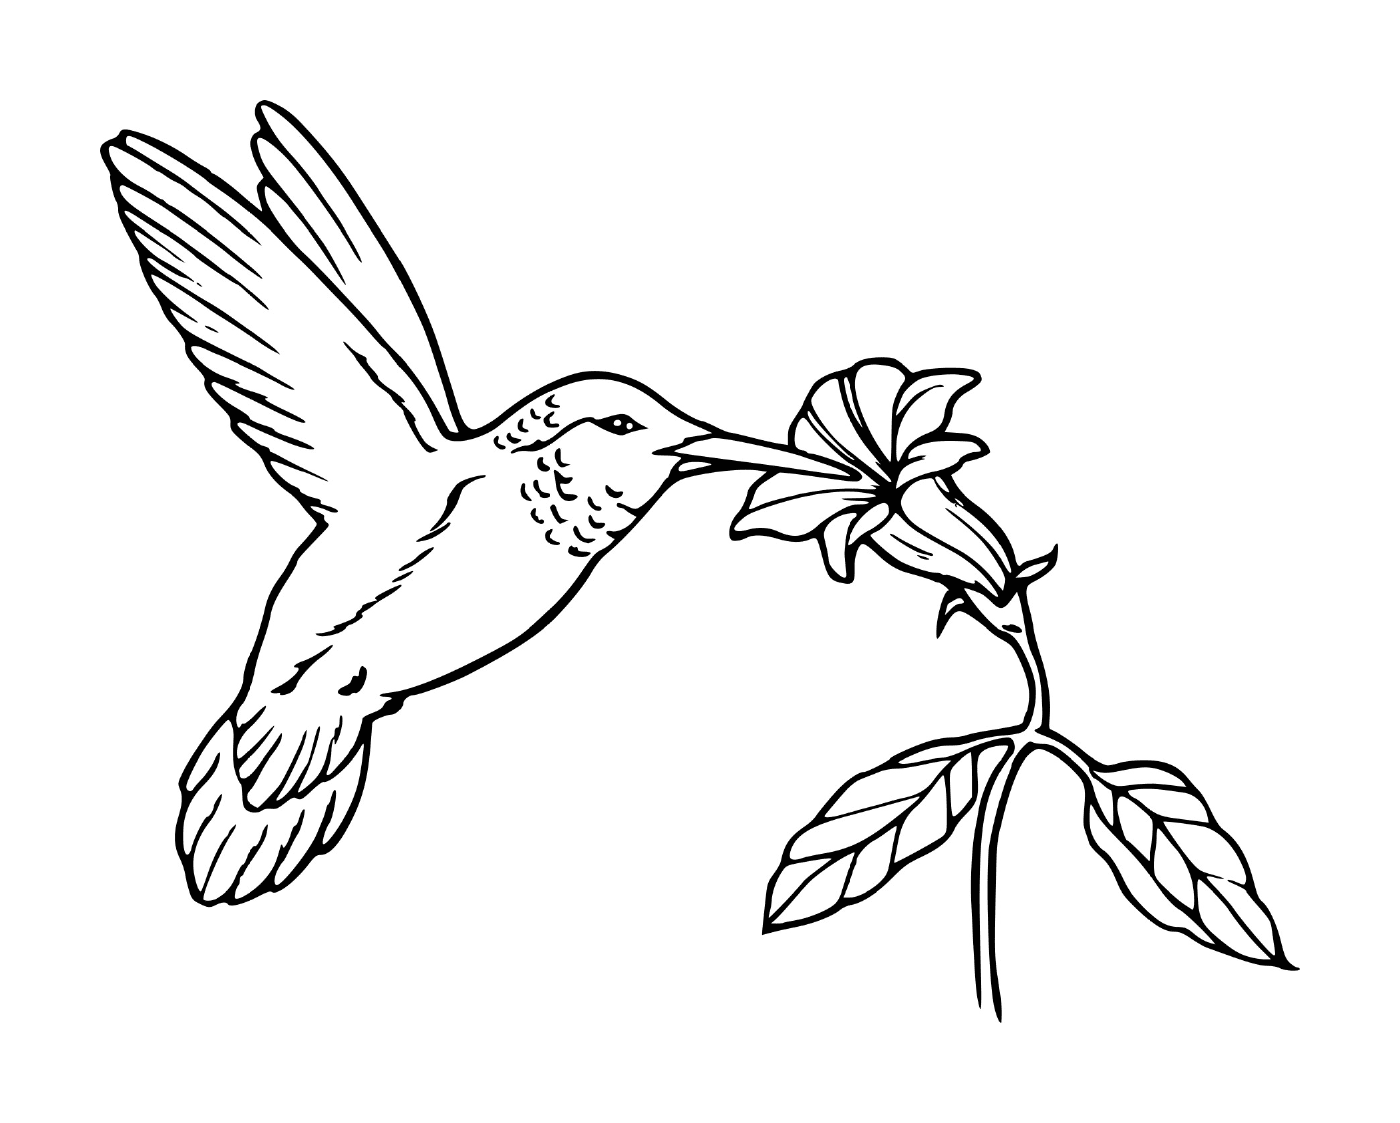  Kolibri und Blume im Flug 